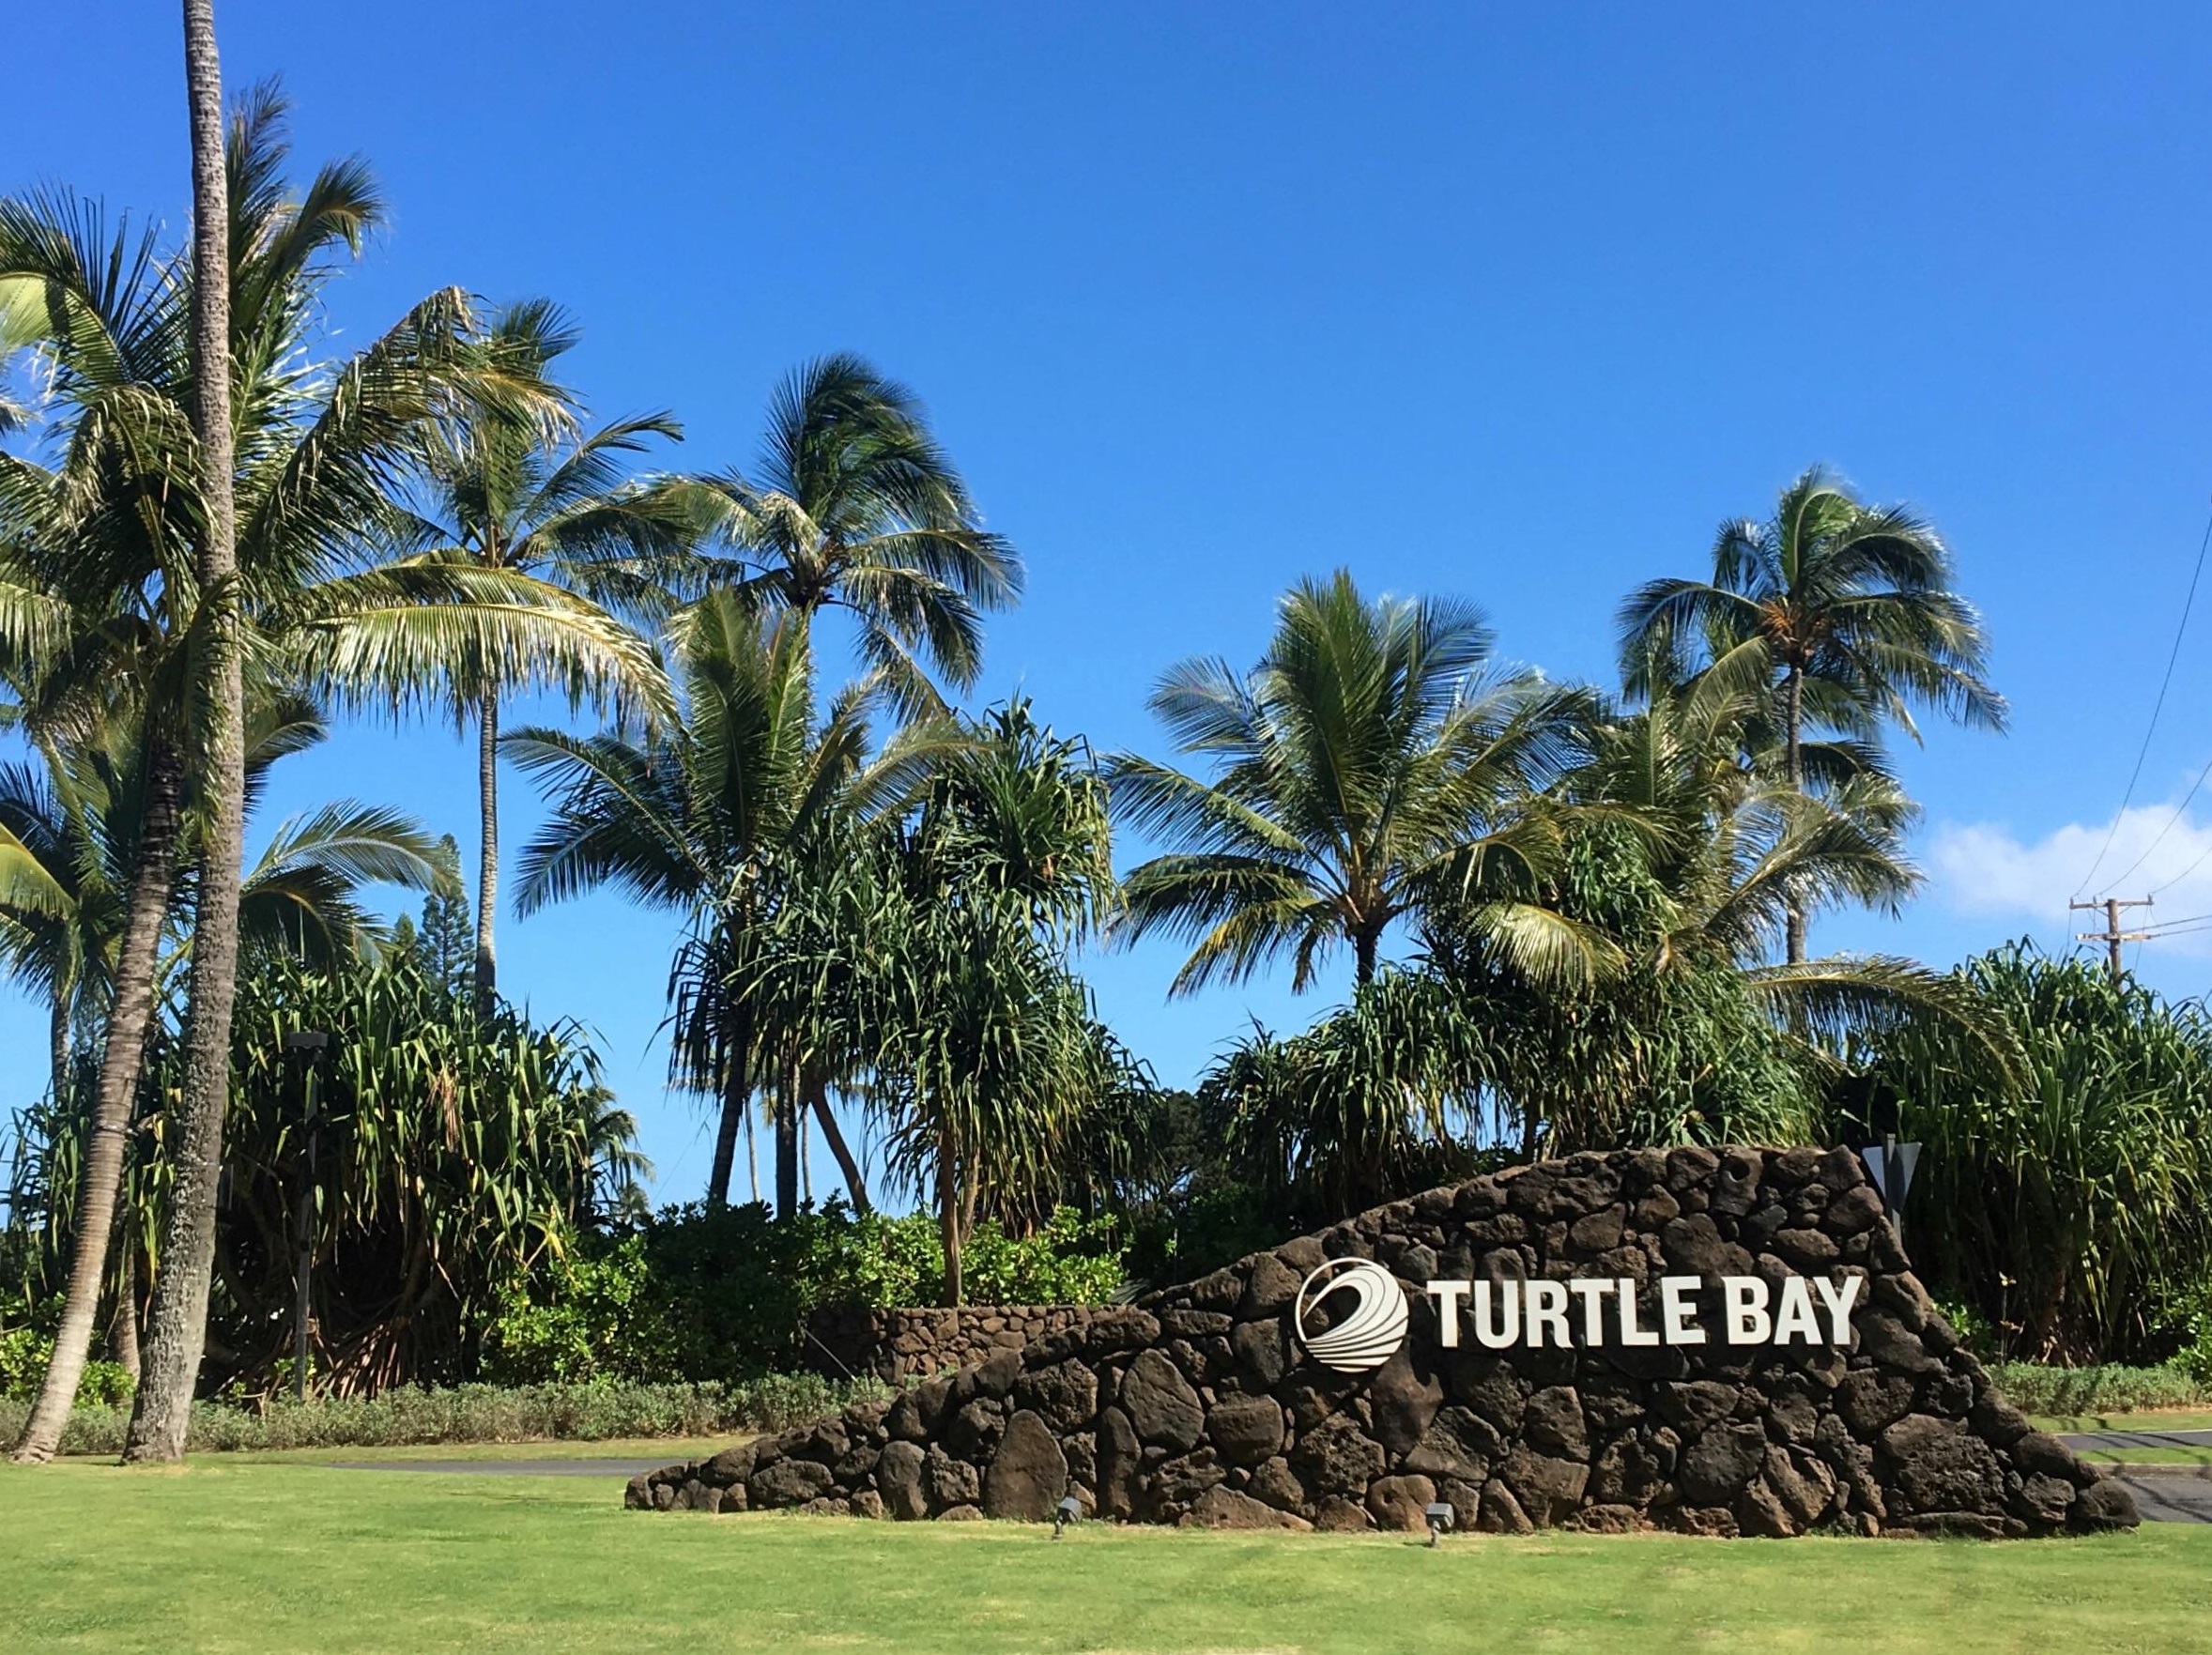 Turtle Bay Resort in Oahu's North Shore, Hawaii